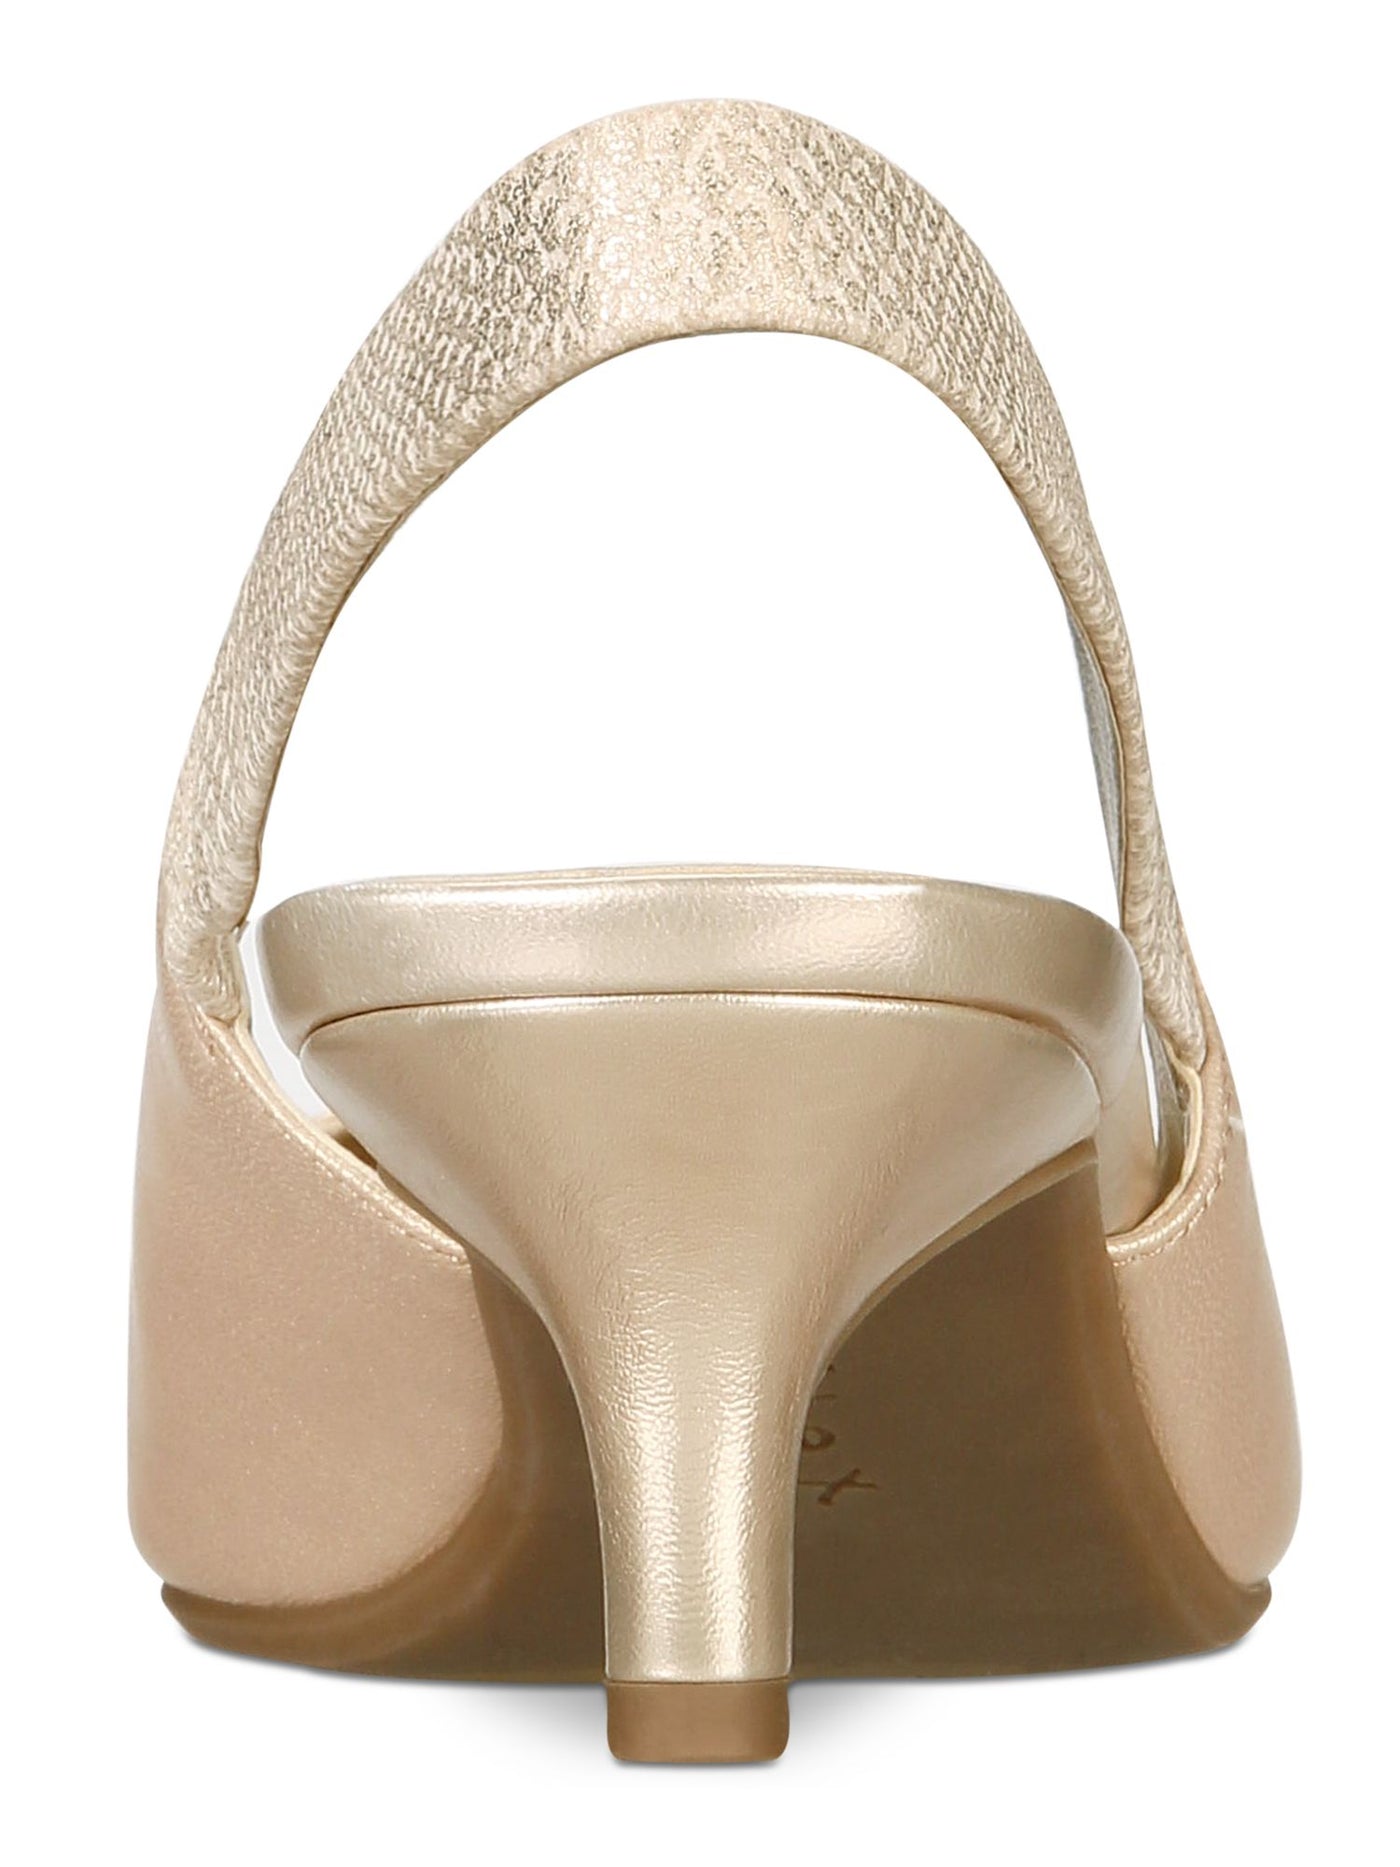 ANNE KLEIN Womens Gold Flex Gore Accent Comfort Aileen Pointed Toe Kitten Heel Slip On Pumps Shoes 6.5 M